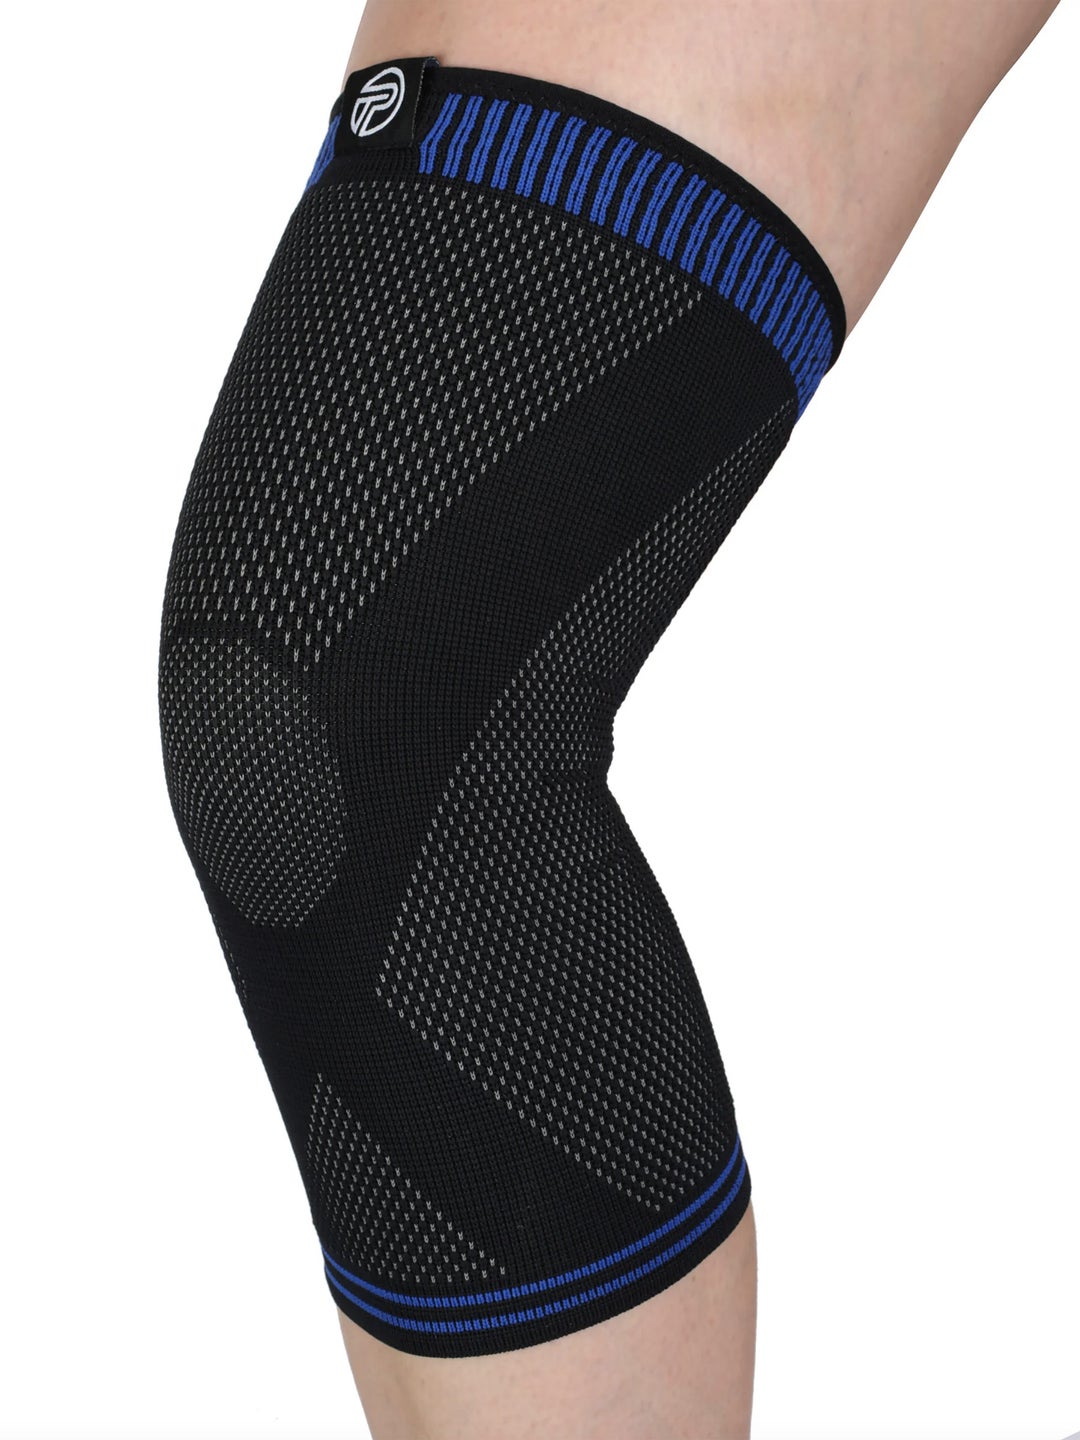 Pro-Tec 3D Flat Knee Support | Tennis Warehouse